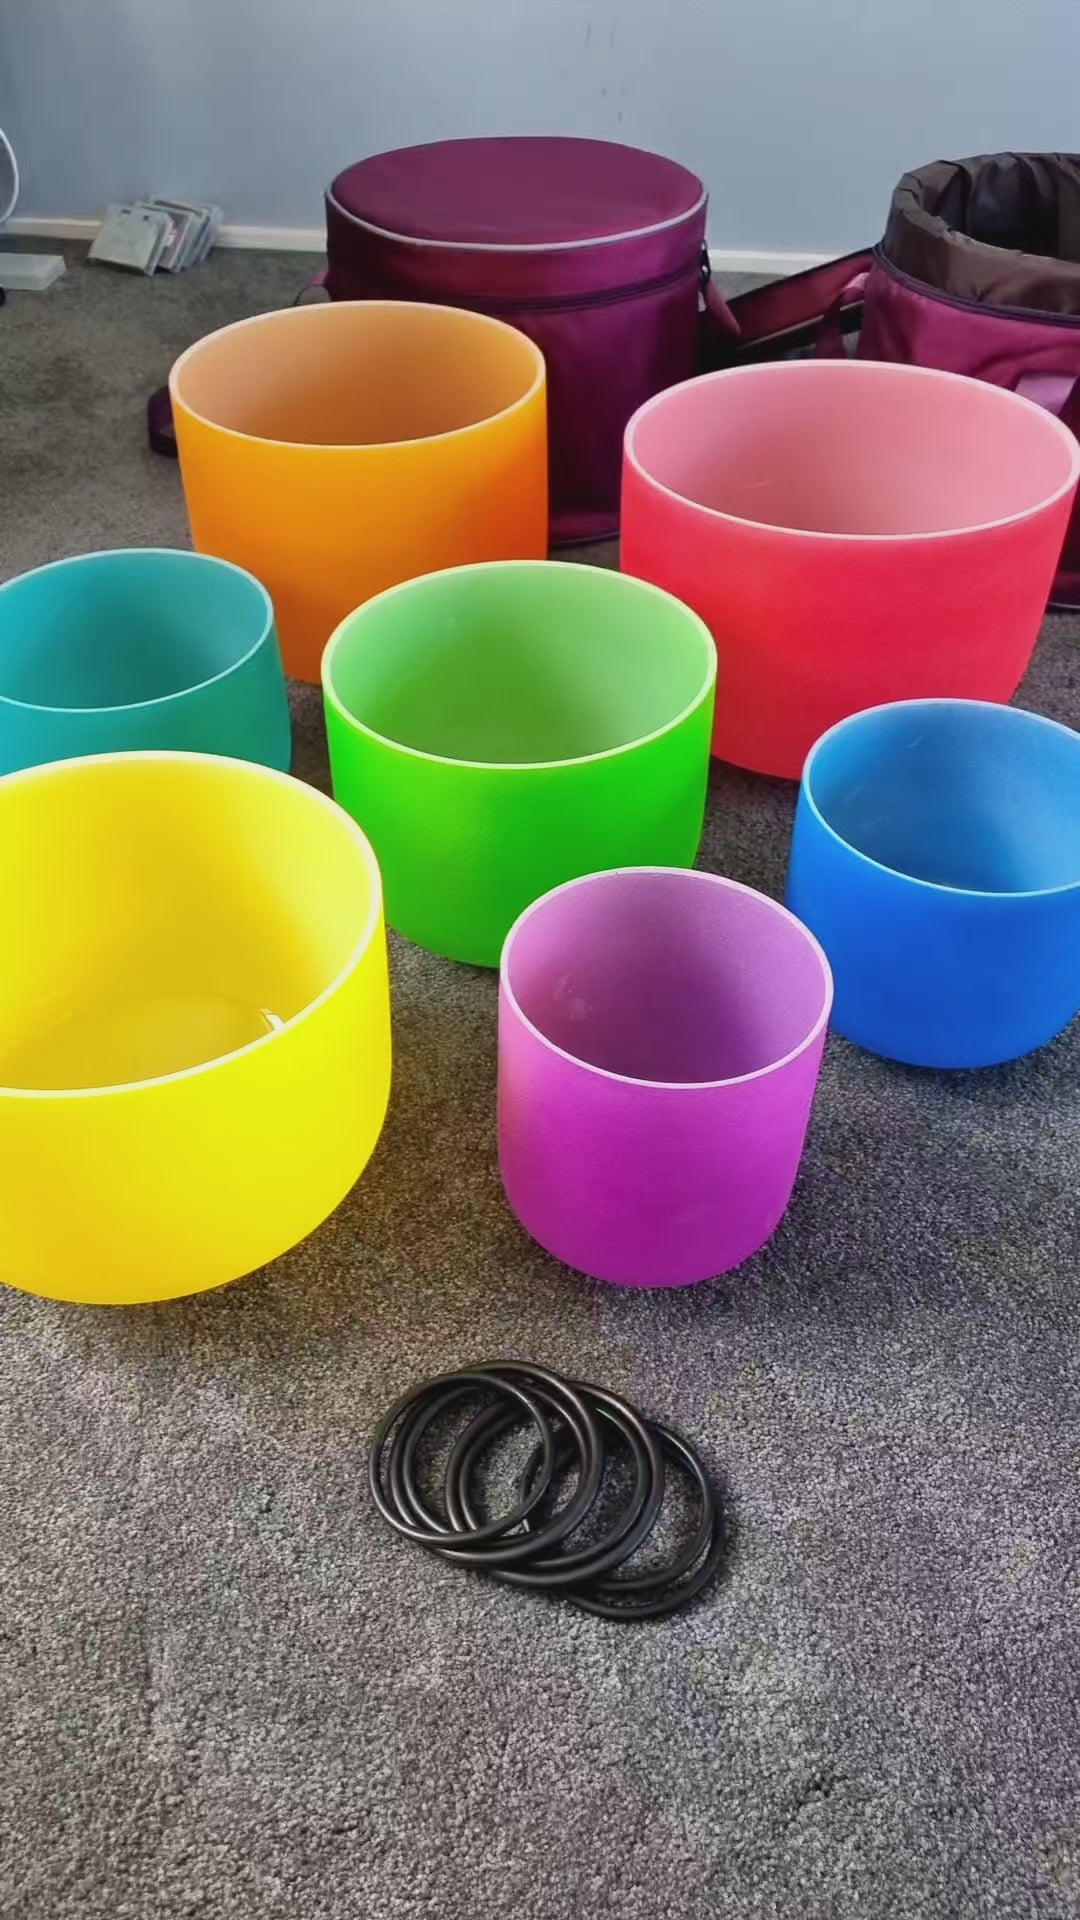 Full Set of 7 Colour Quartz Crystal Singing Bowls